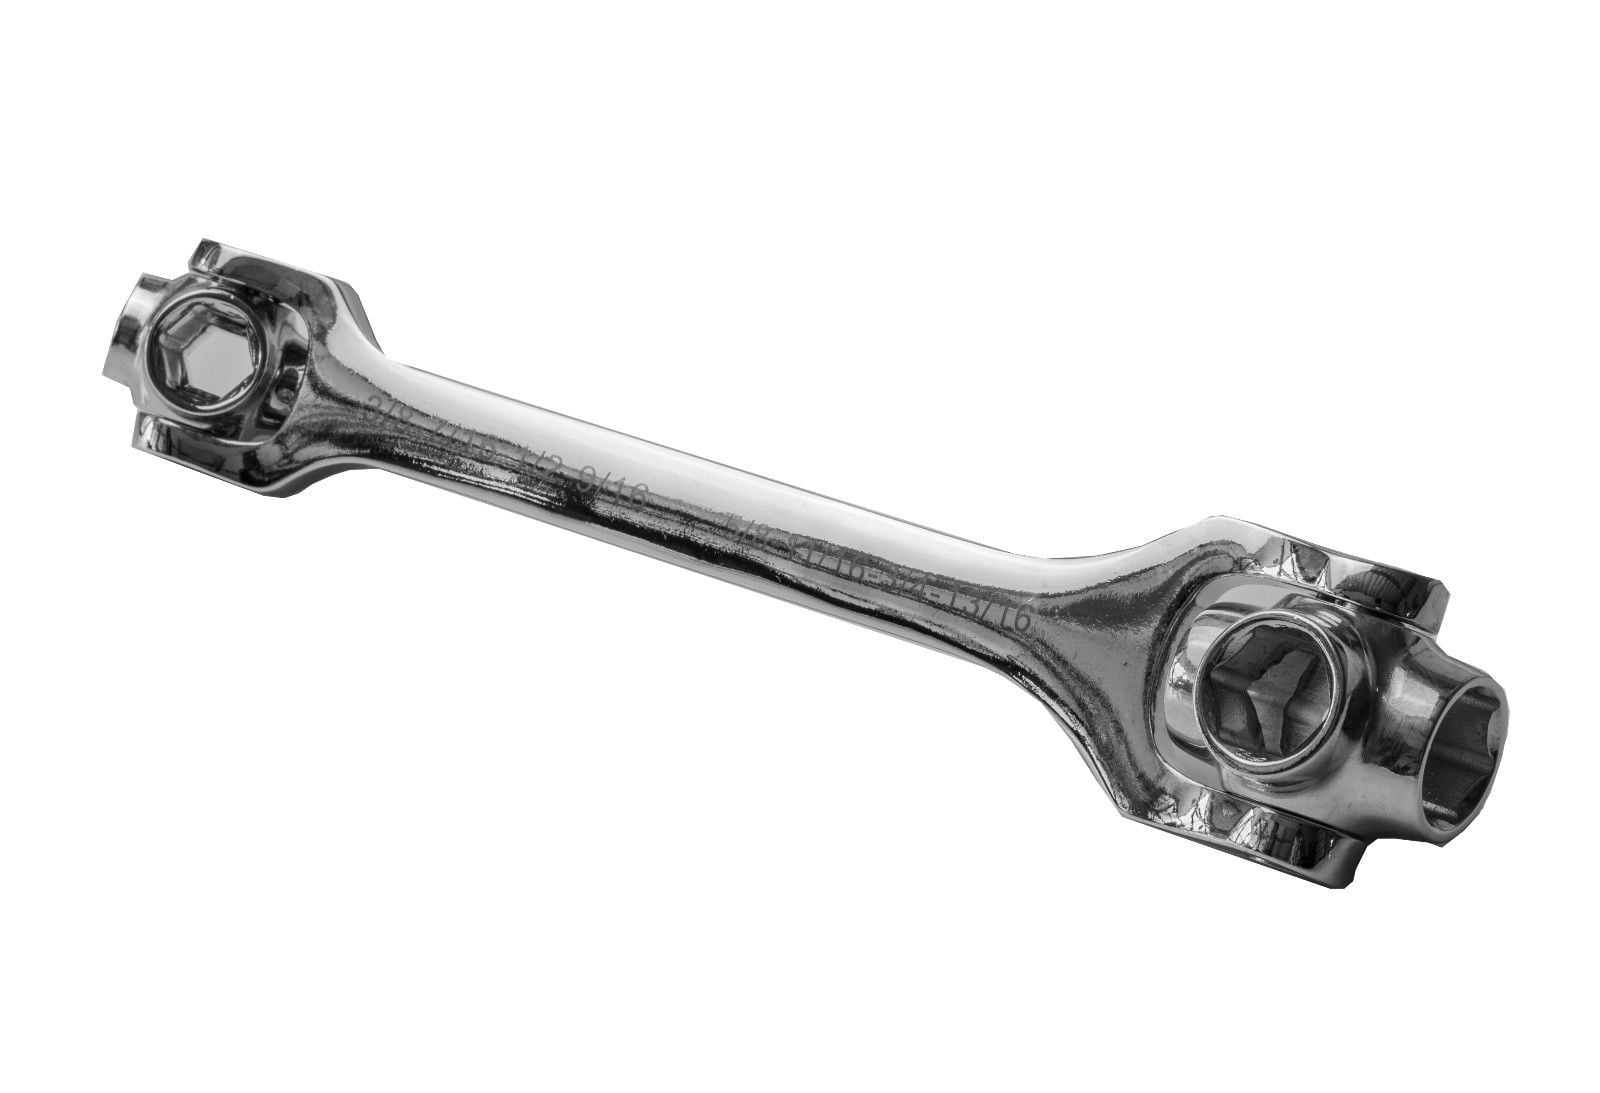 Soccik Portable Dog Bone Shape Bike Bicycle Hexagonal Key Ten Hole Key Bone Spanner Wrench Repair Tool